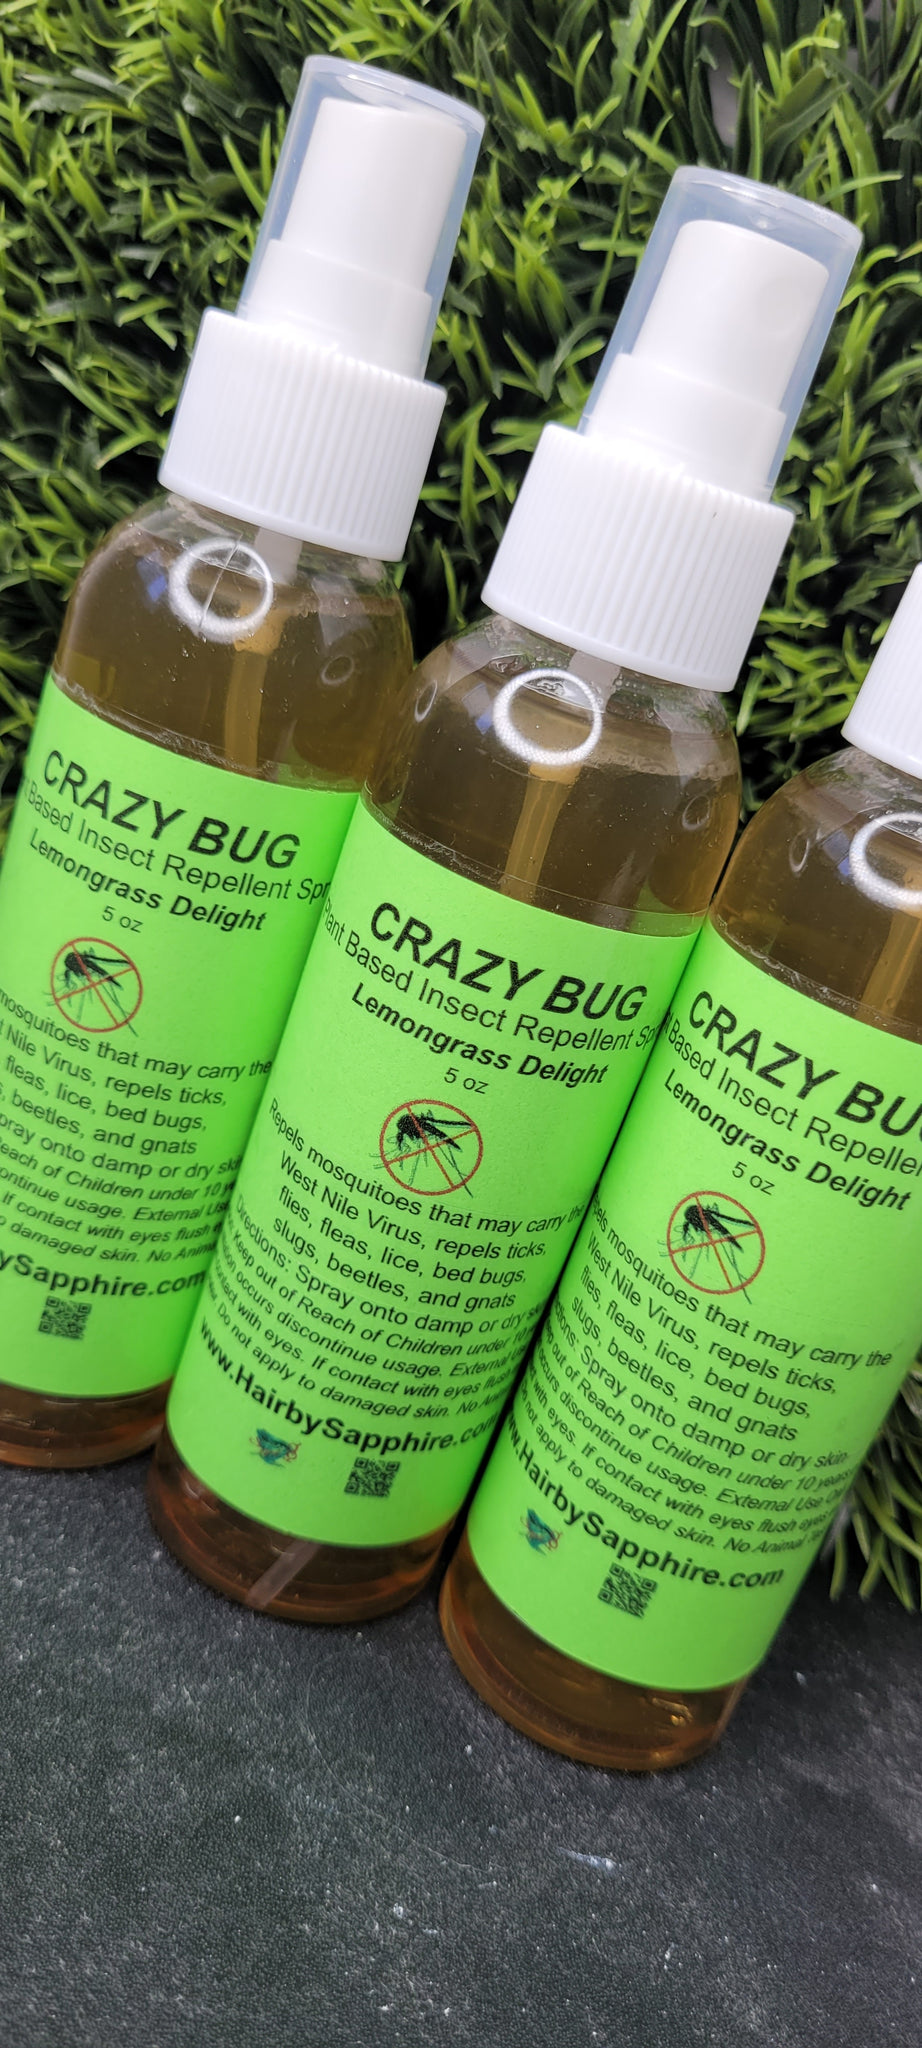 Crazy bug insect repellent, Lemongrass Delight repellent, Lemongrass Delight insect repellent, bug spray, mosquito spray, non Aerosol tick spray